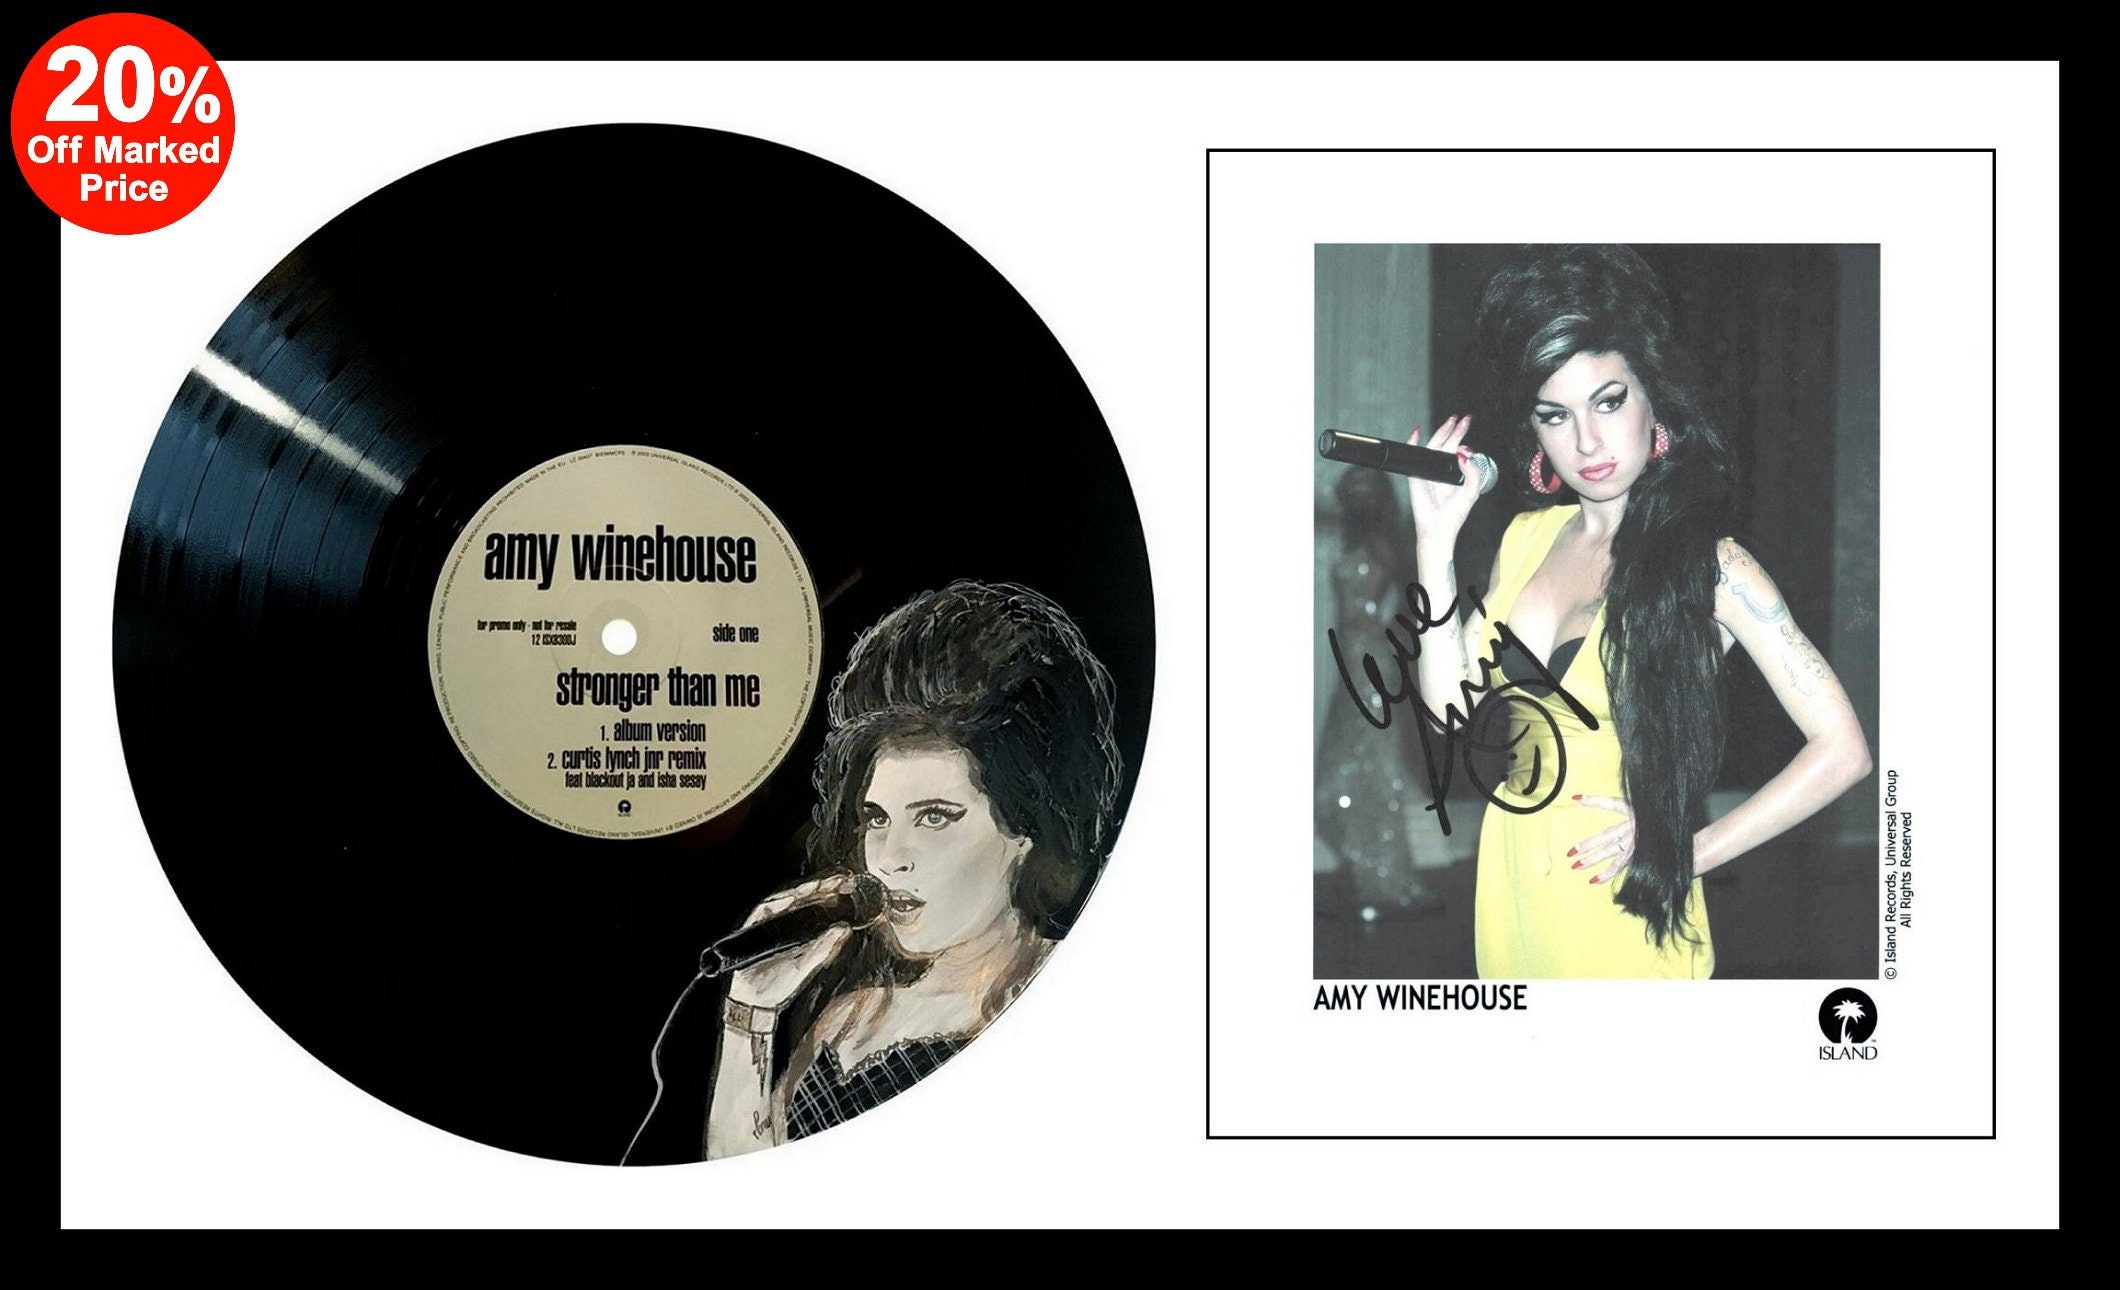 Amy Winehouse Auténtico autógrafo firmado a mano Con vinilo